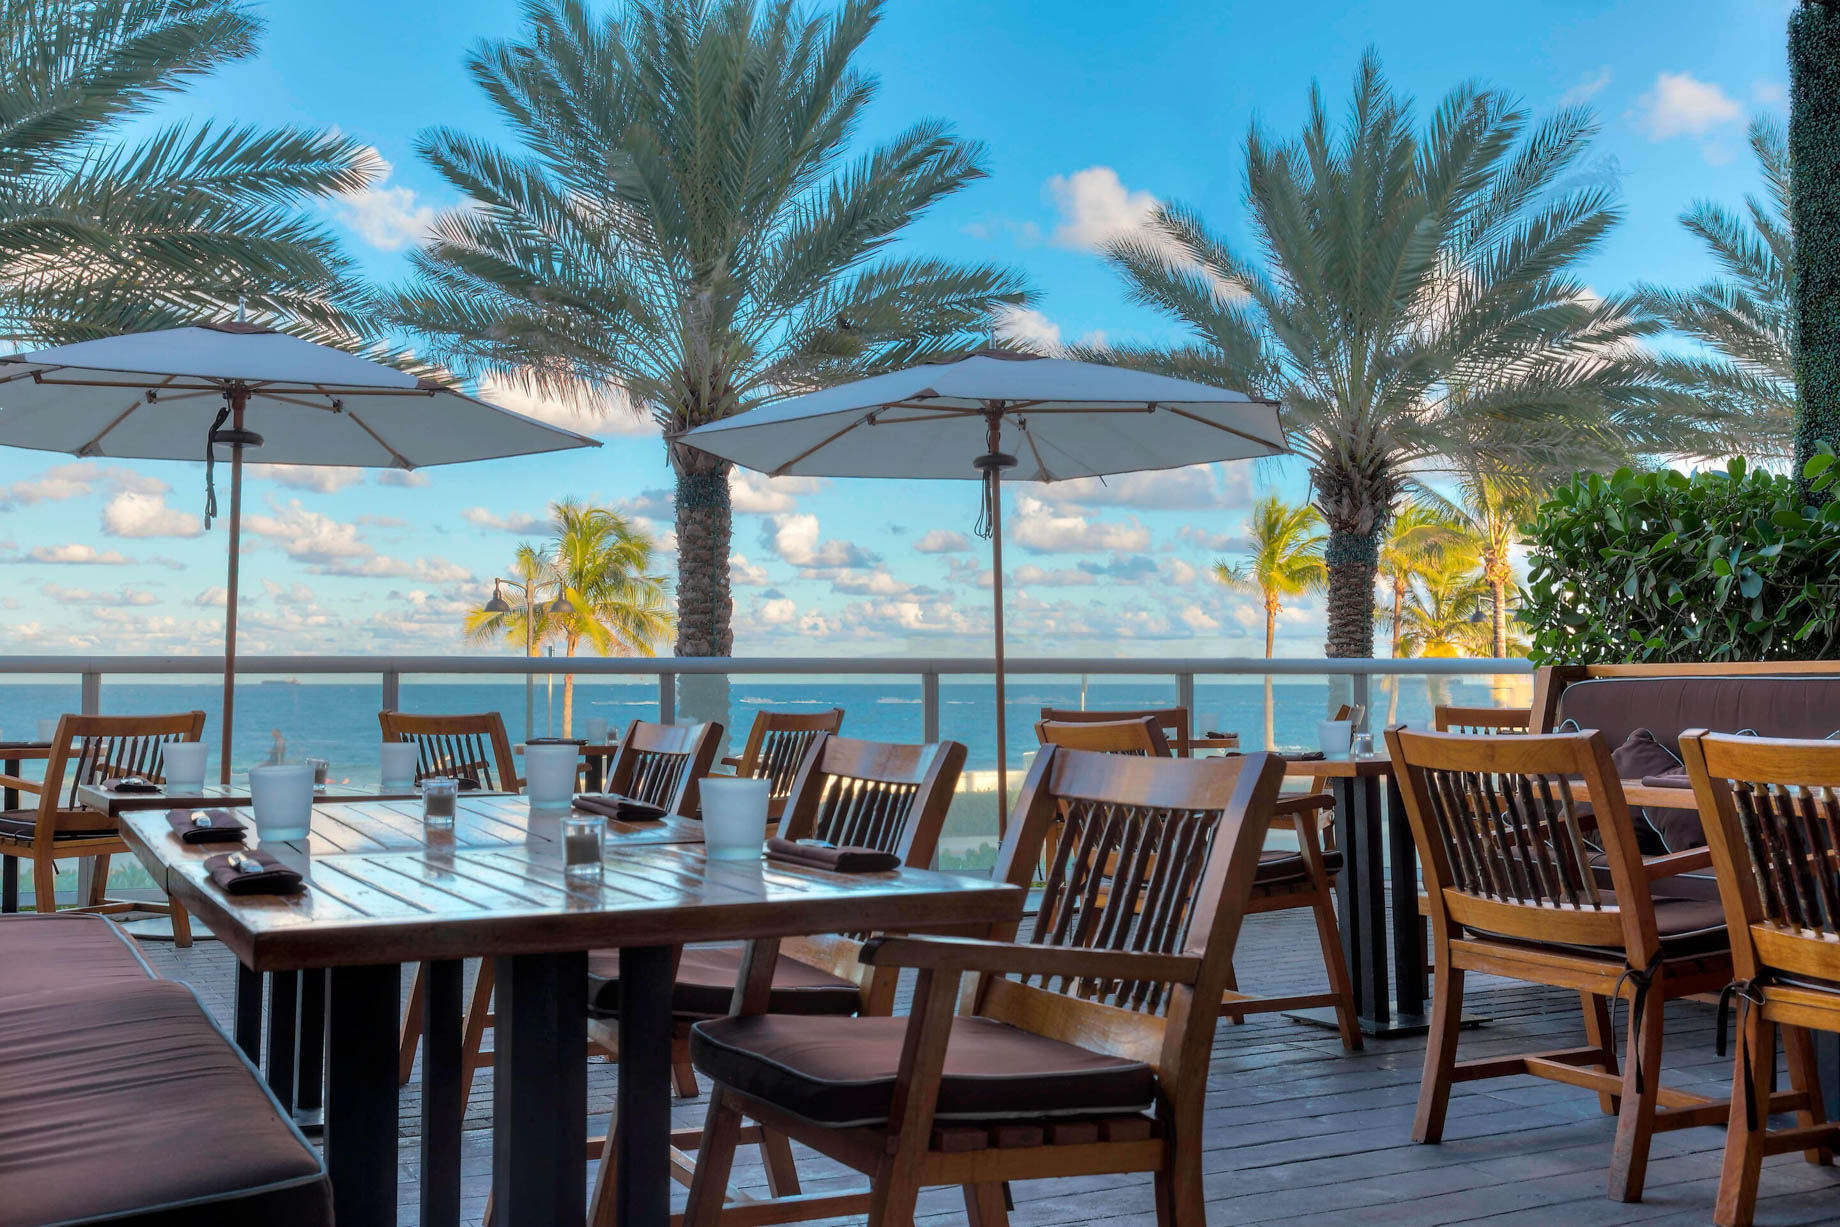 W Fort Lauderdale Hotel – Fort Lauderdale, FL, USA – Steak 954 Outdoor Patio